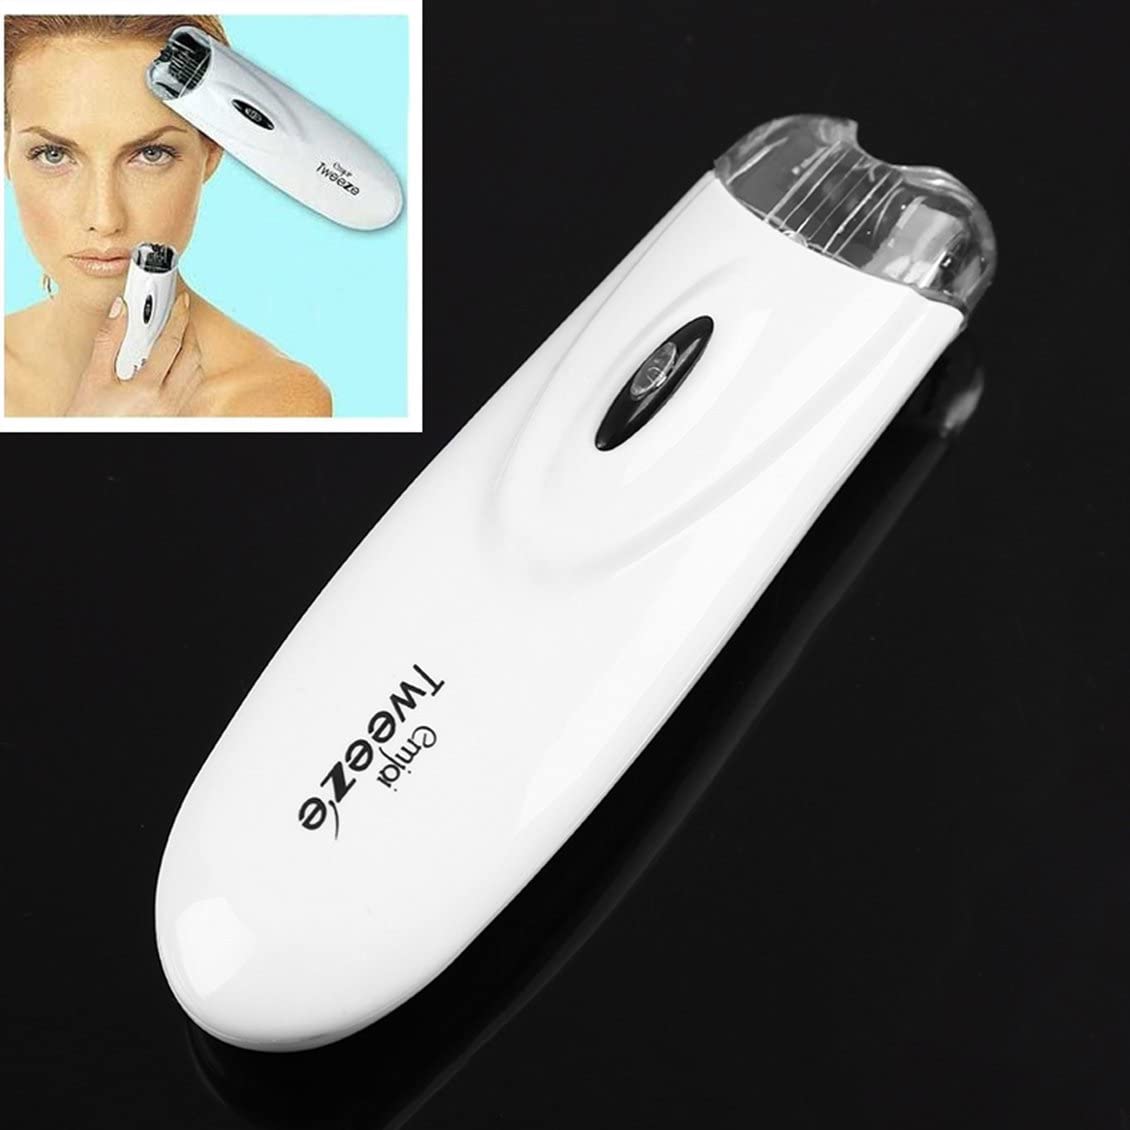 Qiningxia Tweezers Facial Hair r Epilator Easy No Pain Electric Hair Trimming, White & Black, Medium